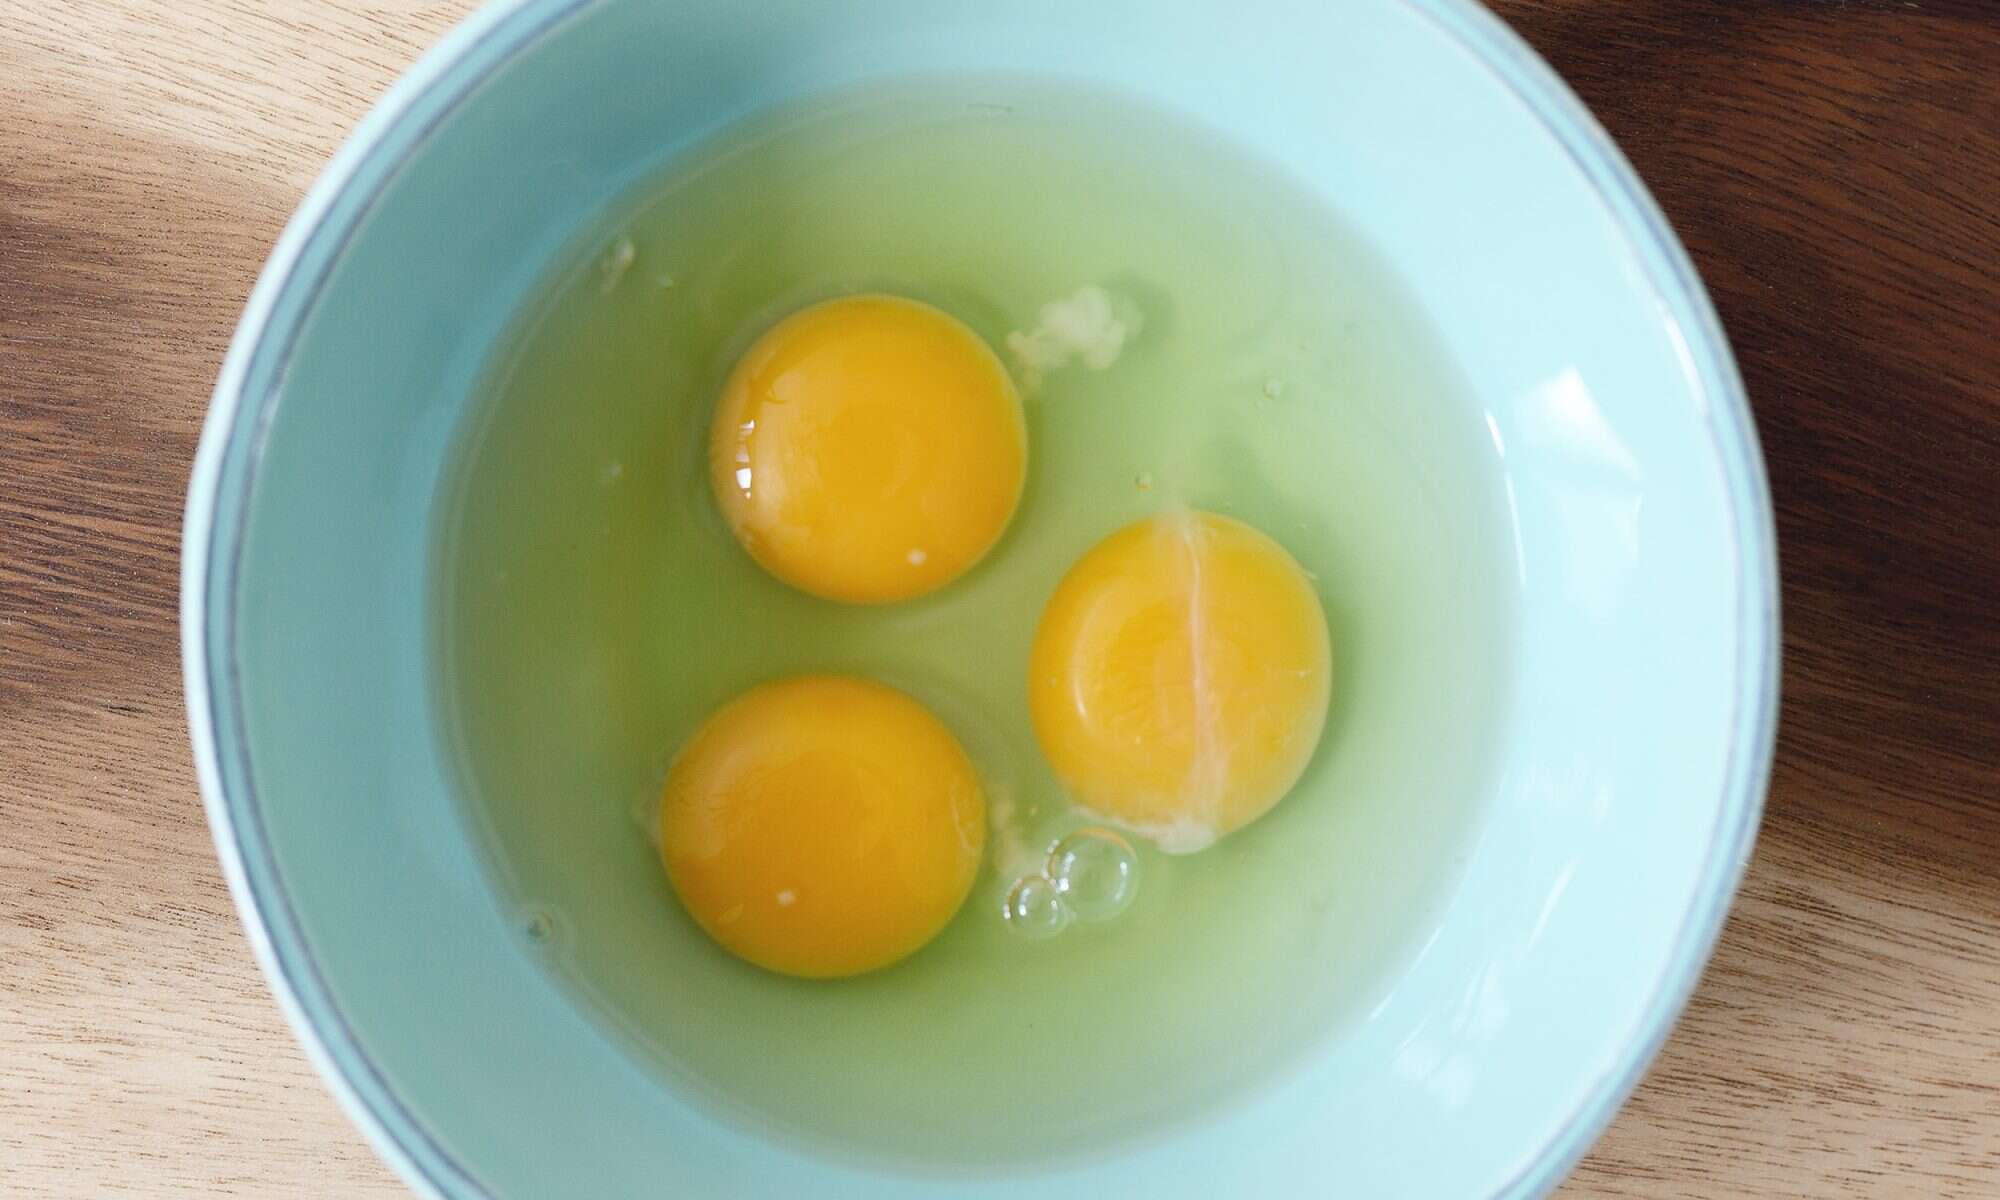 Is Drinking Egg Whites Safe?